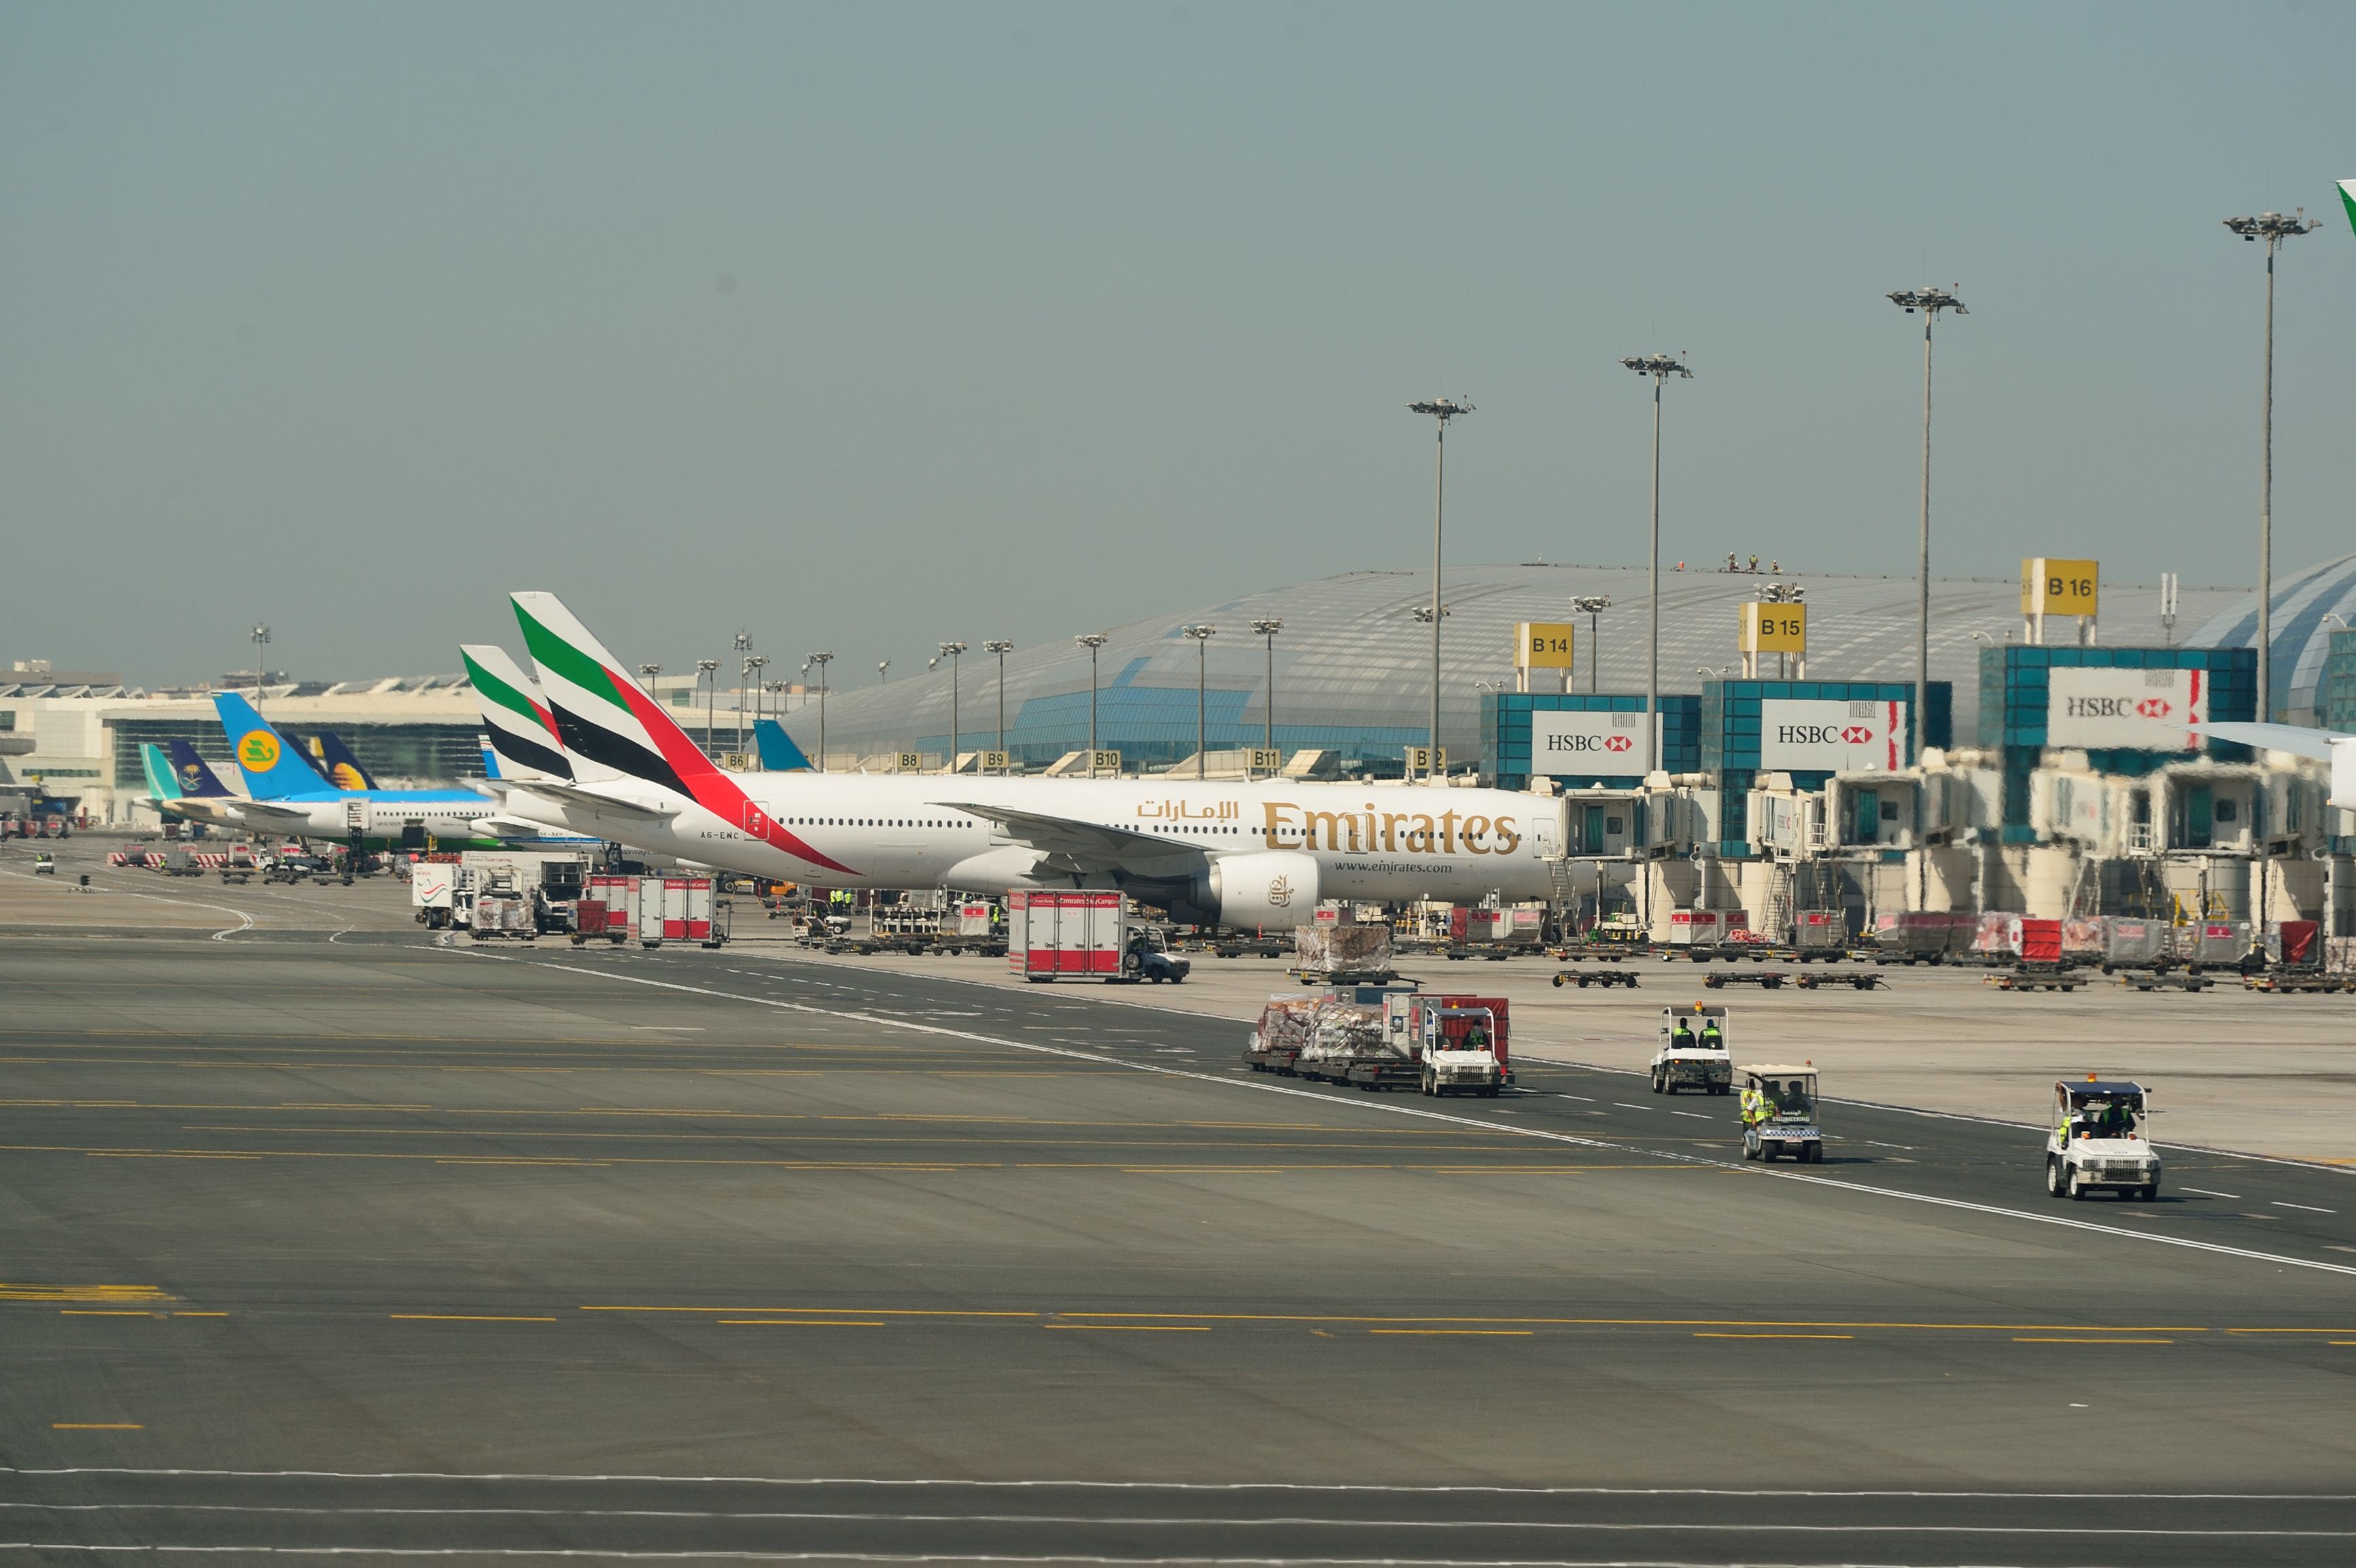 Airlines docked at Dubai International